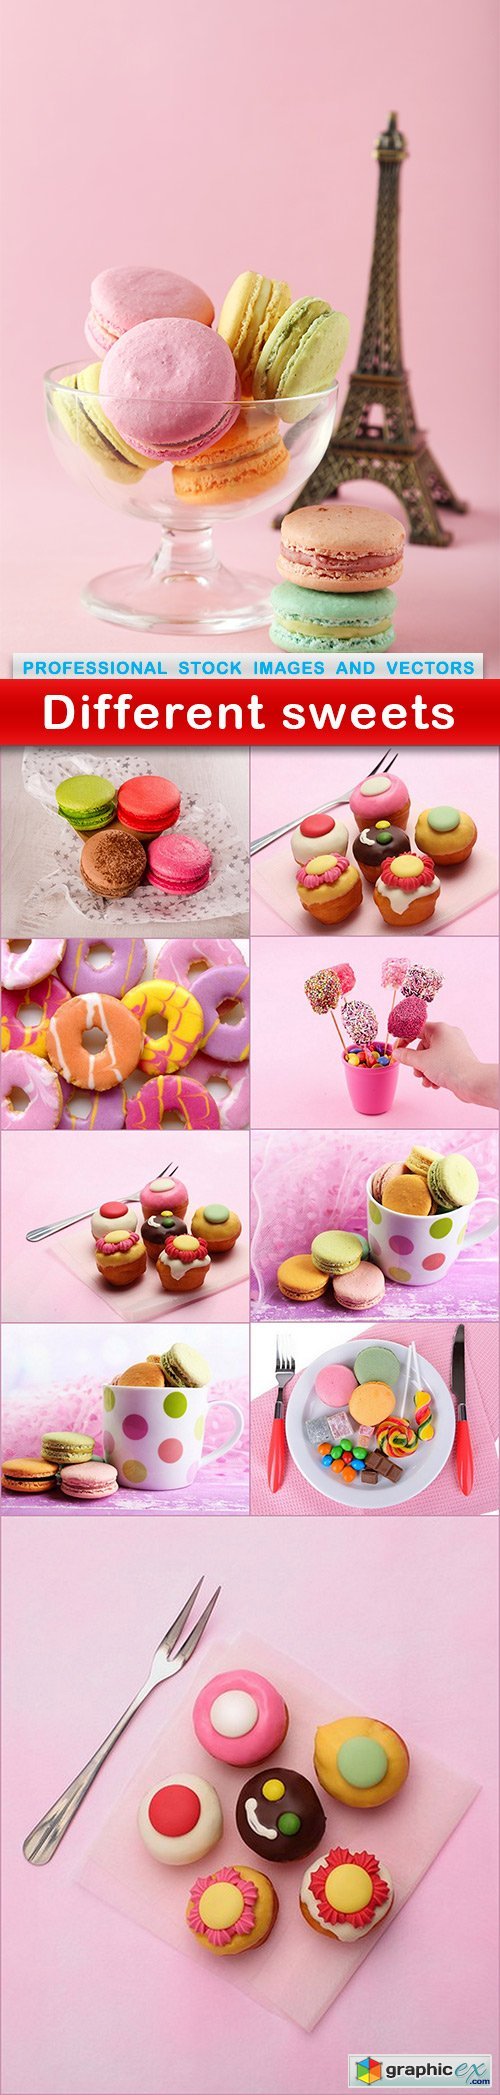 Different sweets - 10 UHQ JPEG